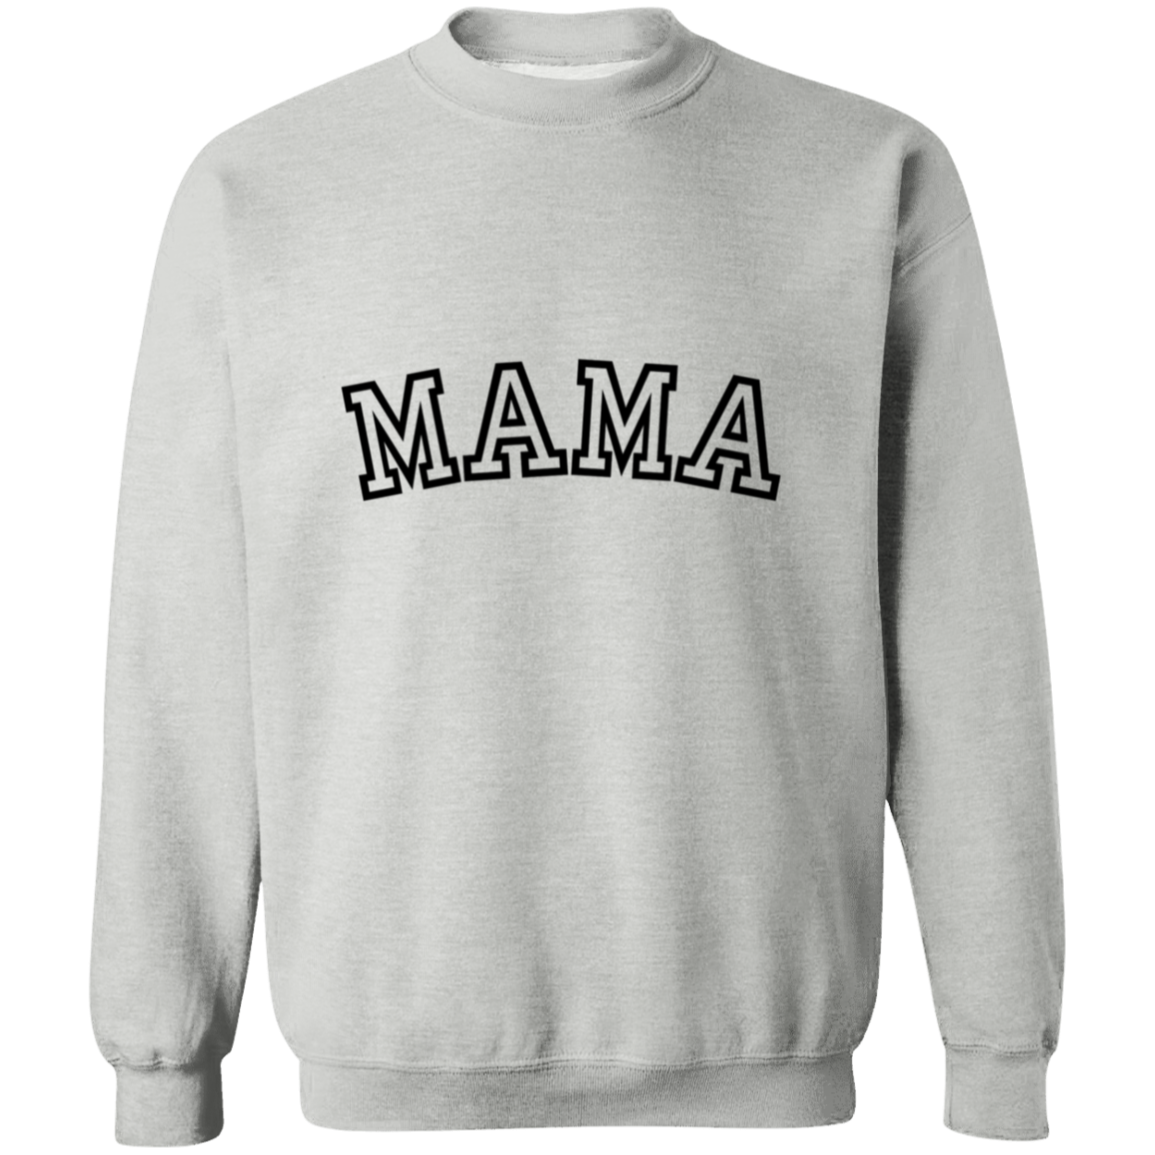 MAMA Sweatshirt Blk Print